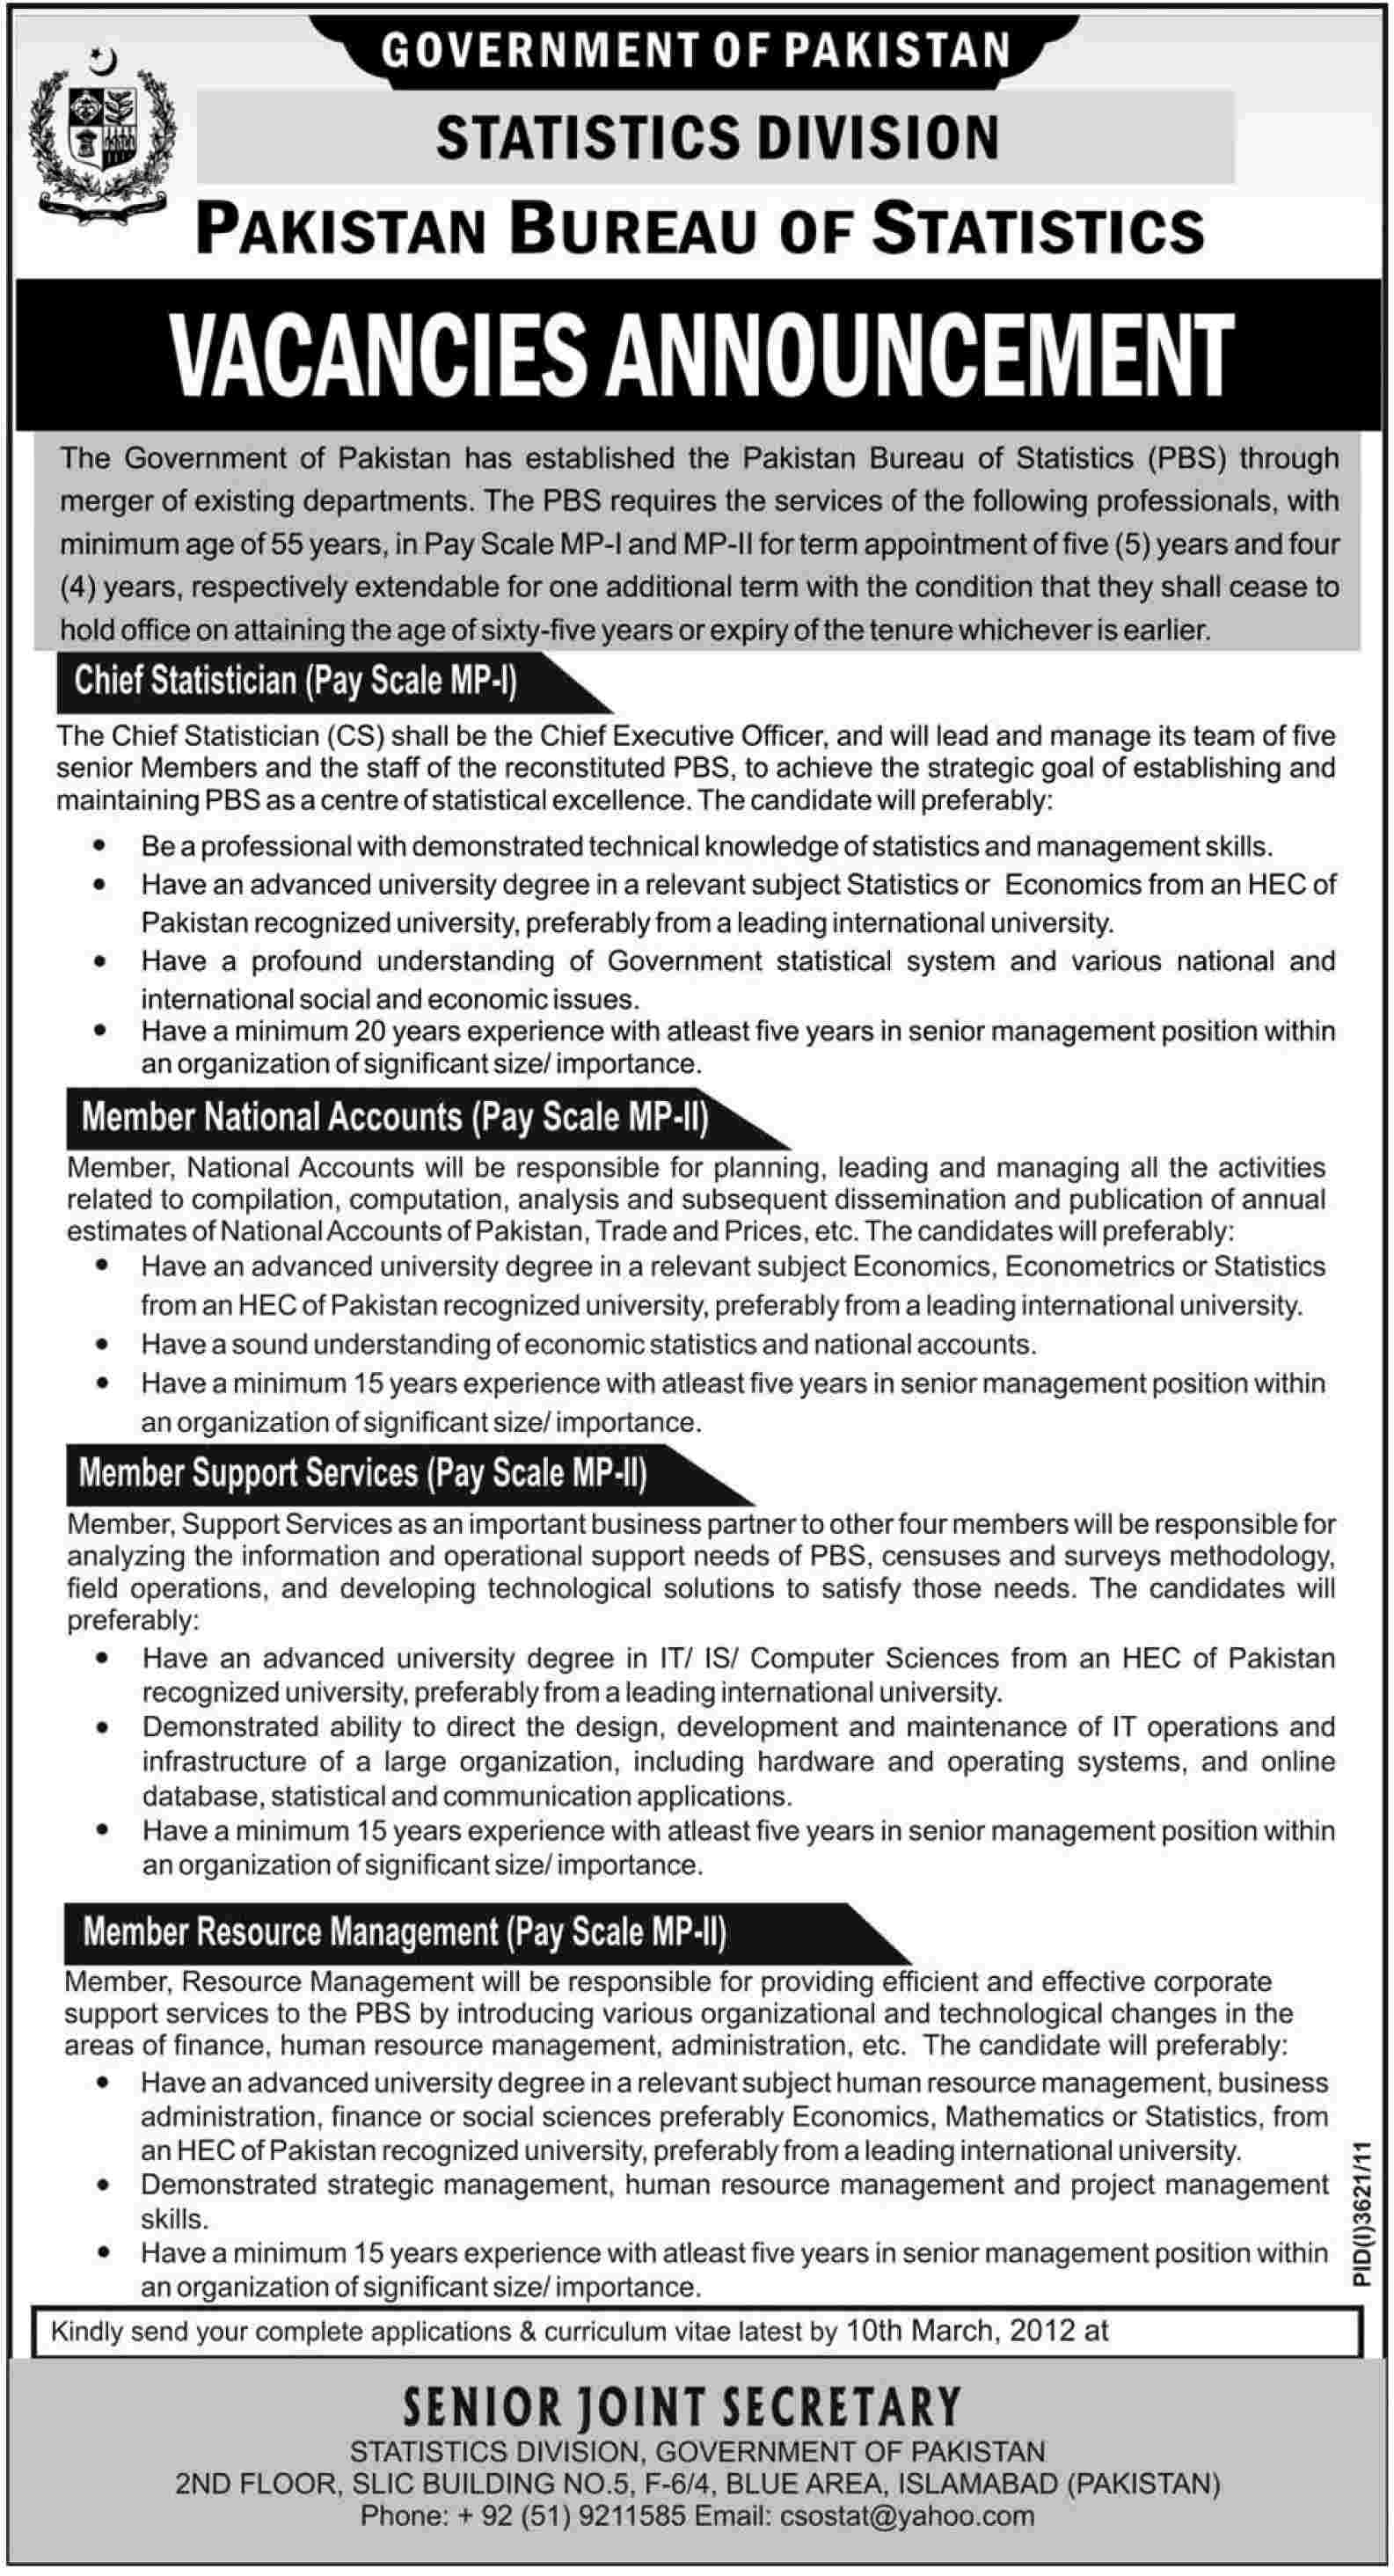 Government of Pakistan, Statistics Division, Pakistan Bureau of Statistics Jobs Opportunity